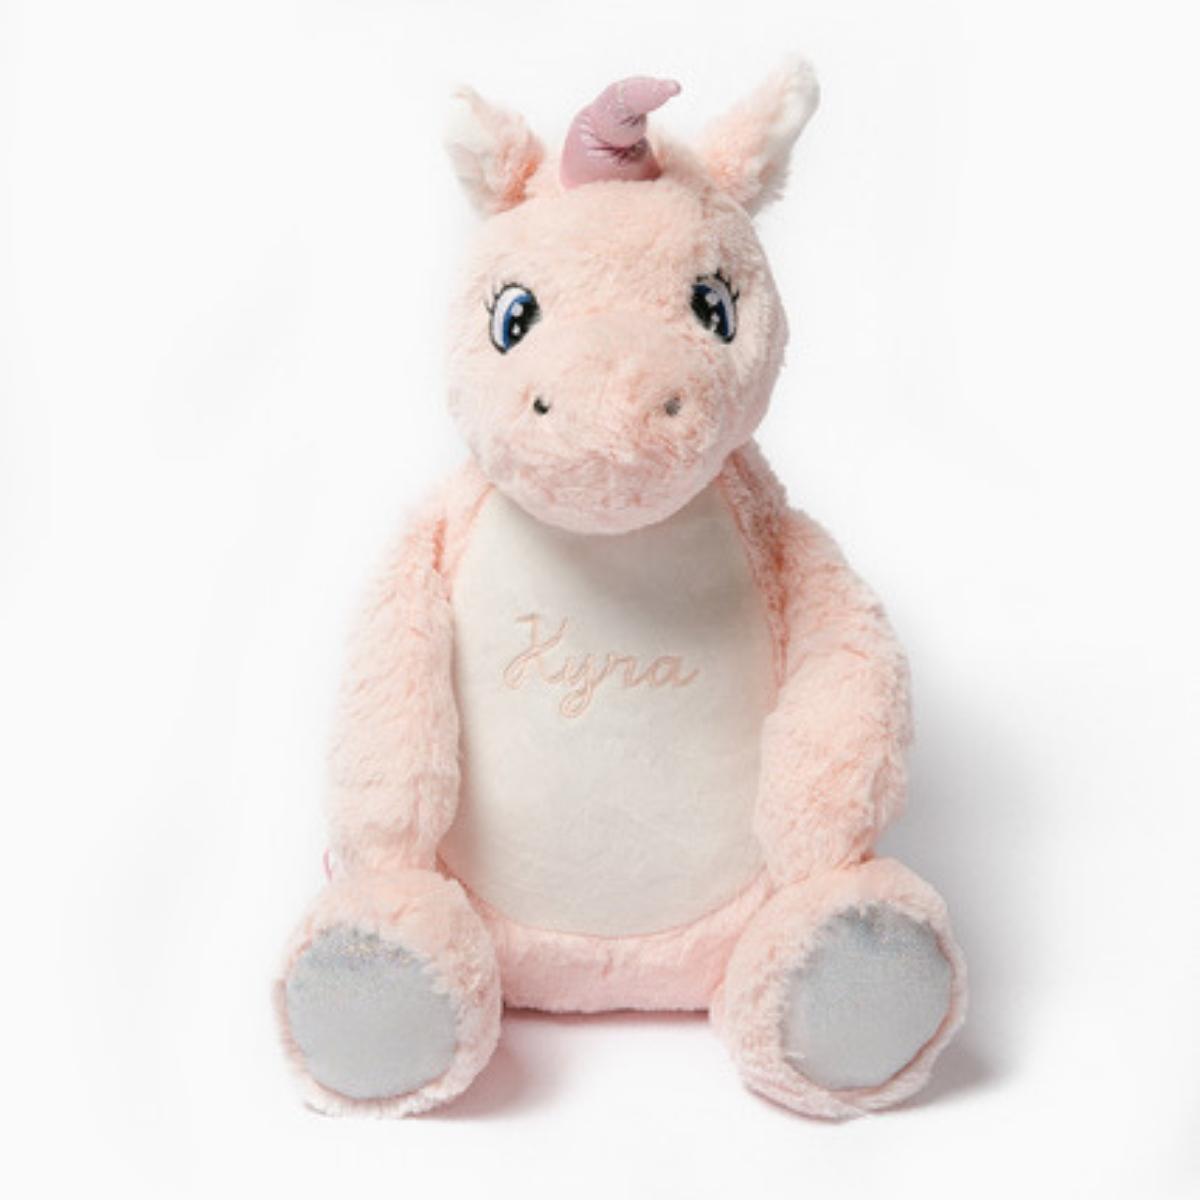 Personalised Baby Blanket and Soft Unicorn Teddy Bundle